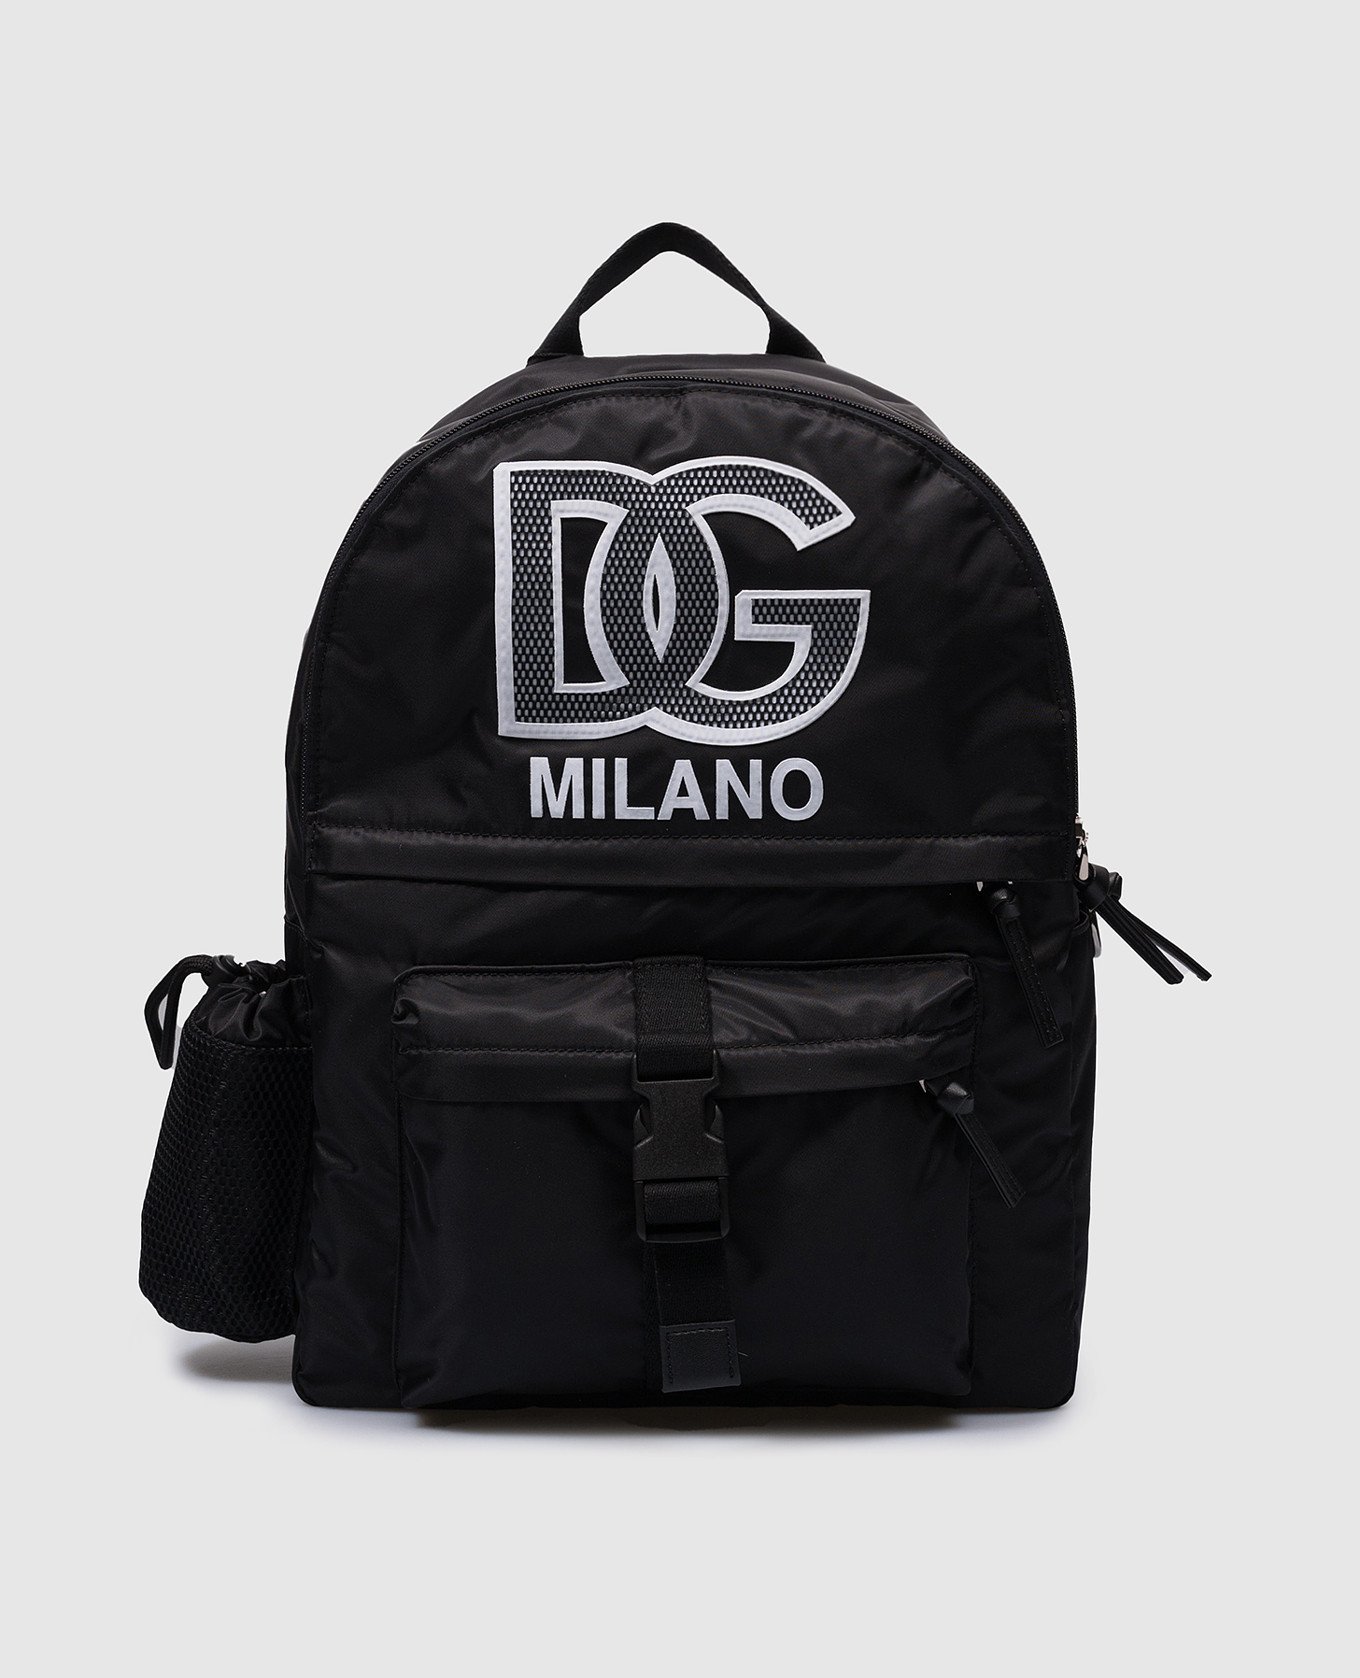 Children's black backpack with logo